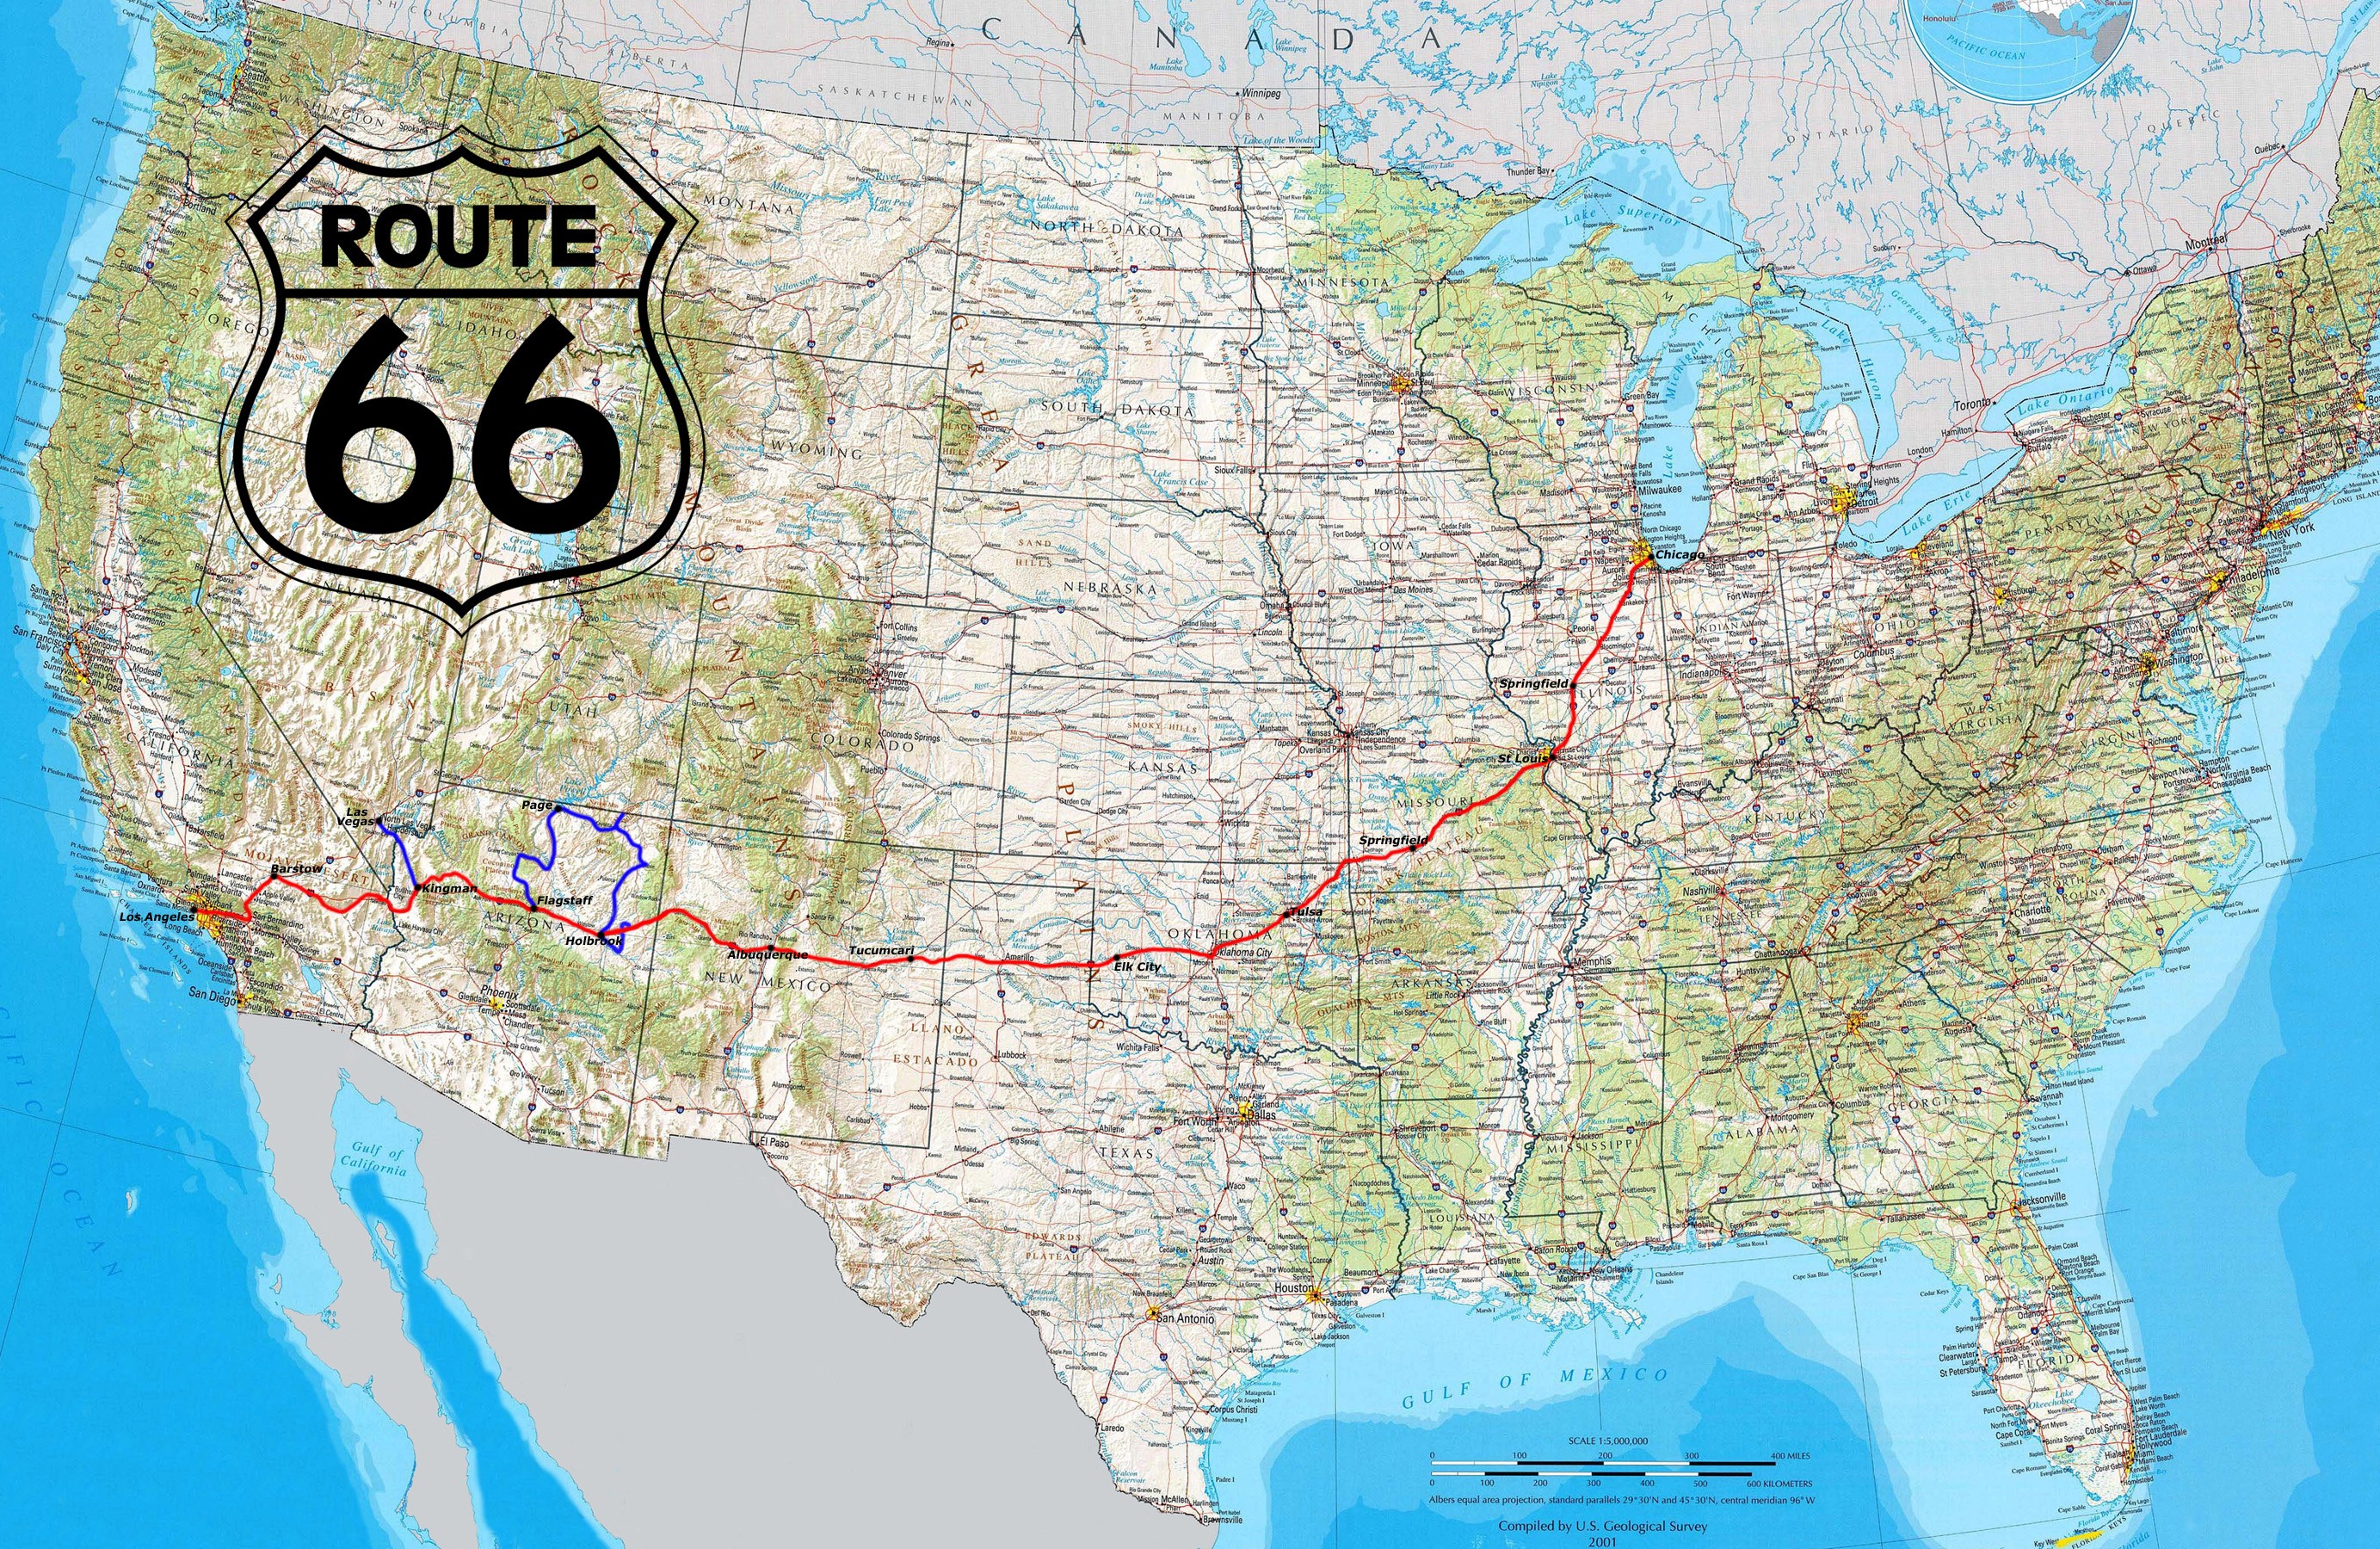 road-route-66-usa-highway-map-north-america-canada-coast-sea